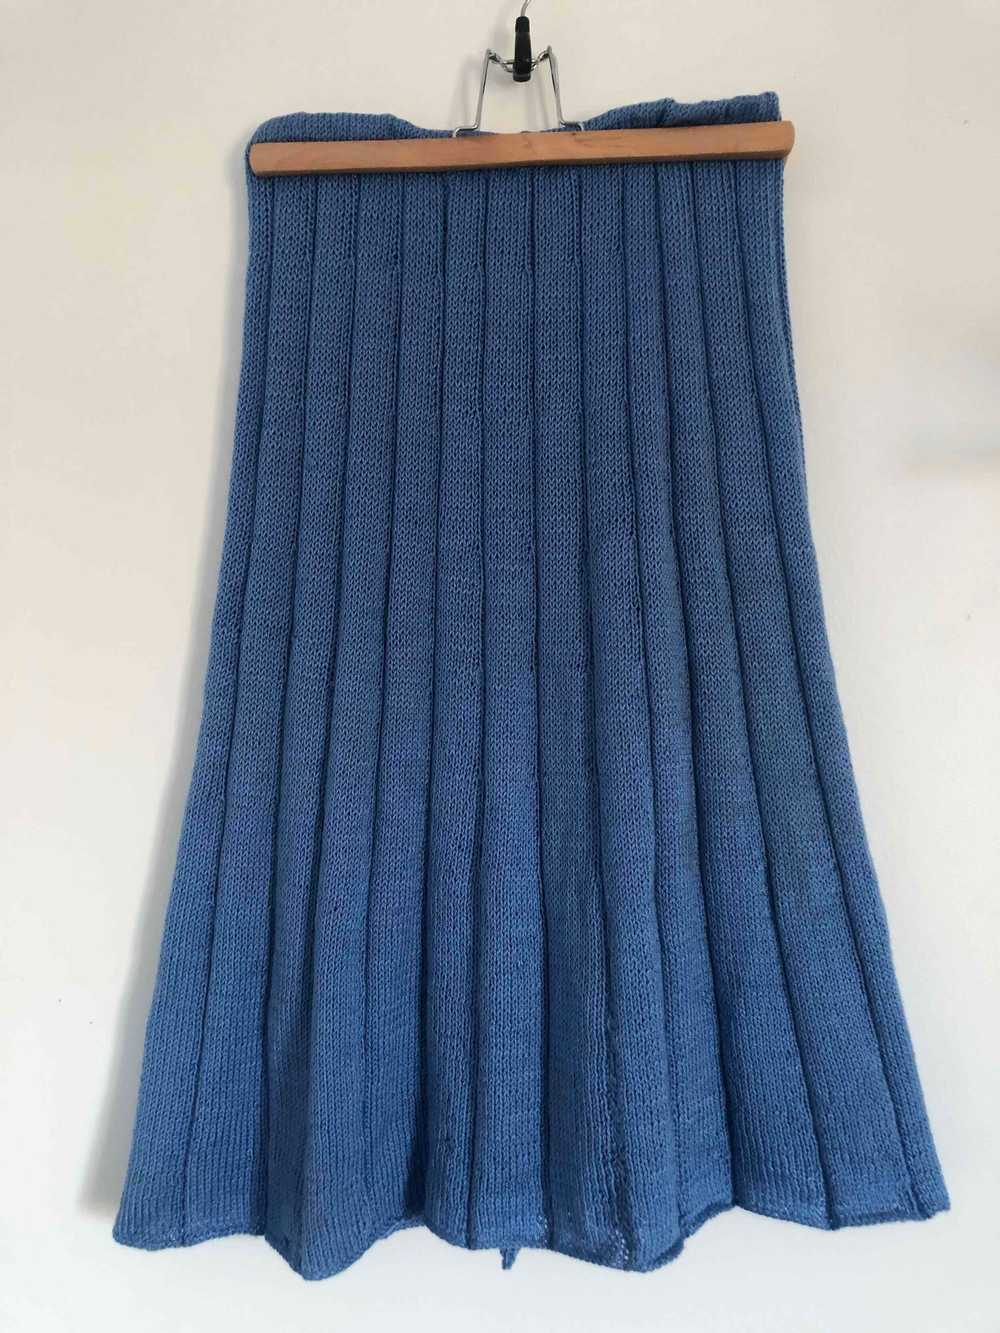 Knit skirt - image 3